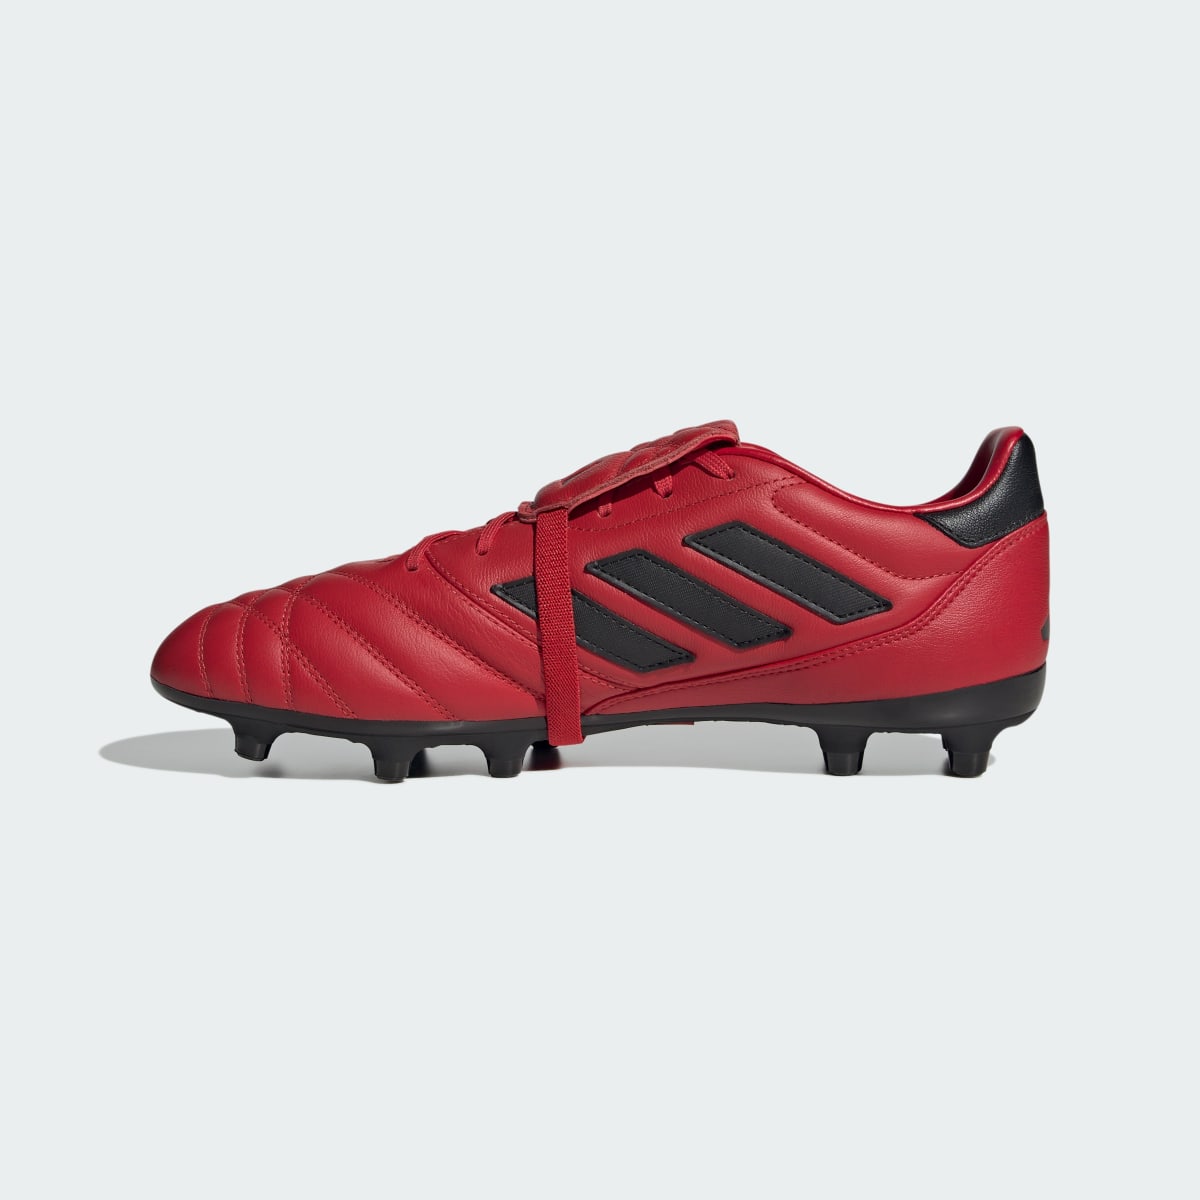 Adidas Copa Gloro Firm Ground Boots. 7